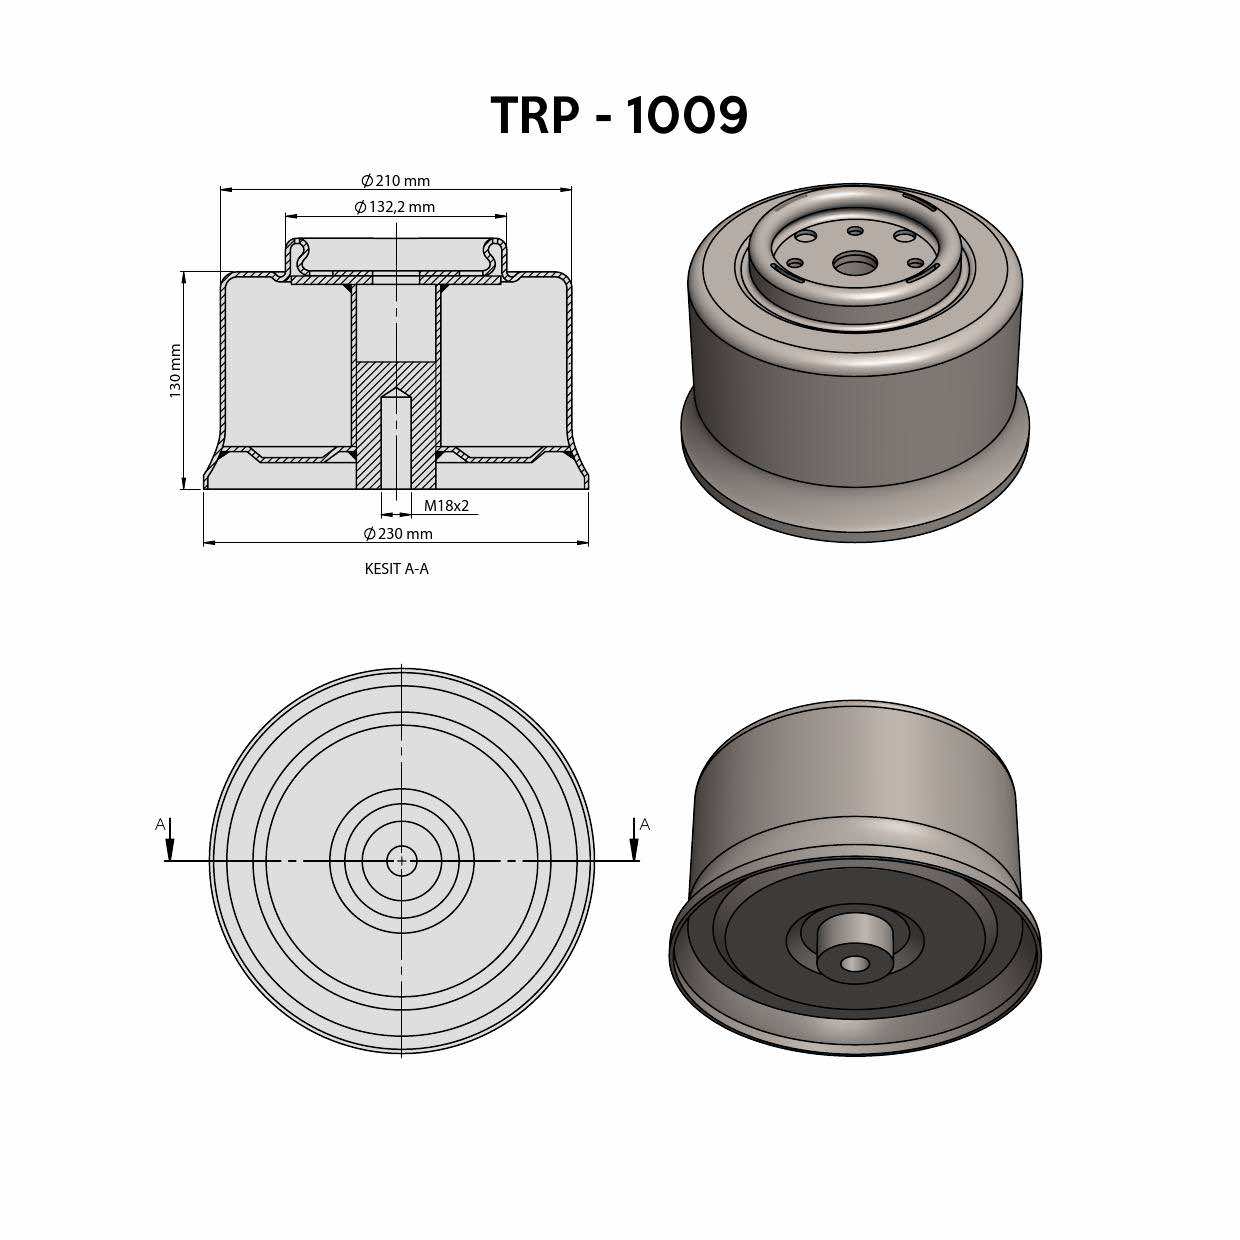 TRP-1009